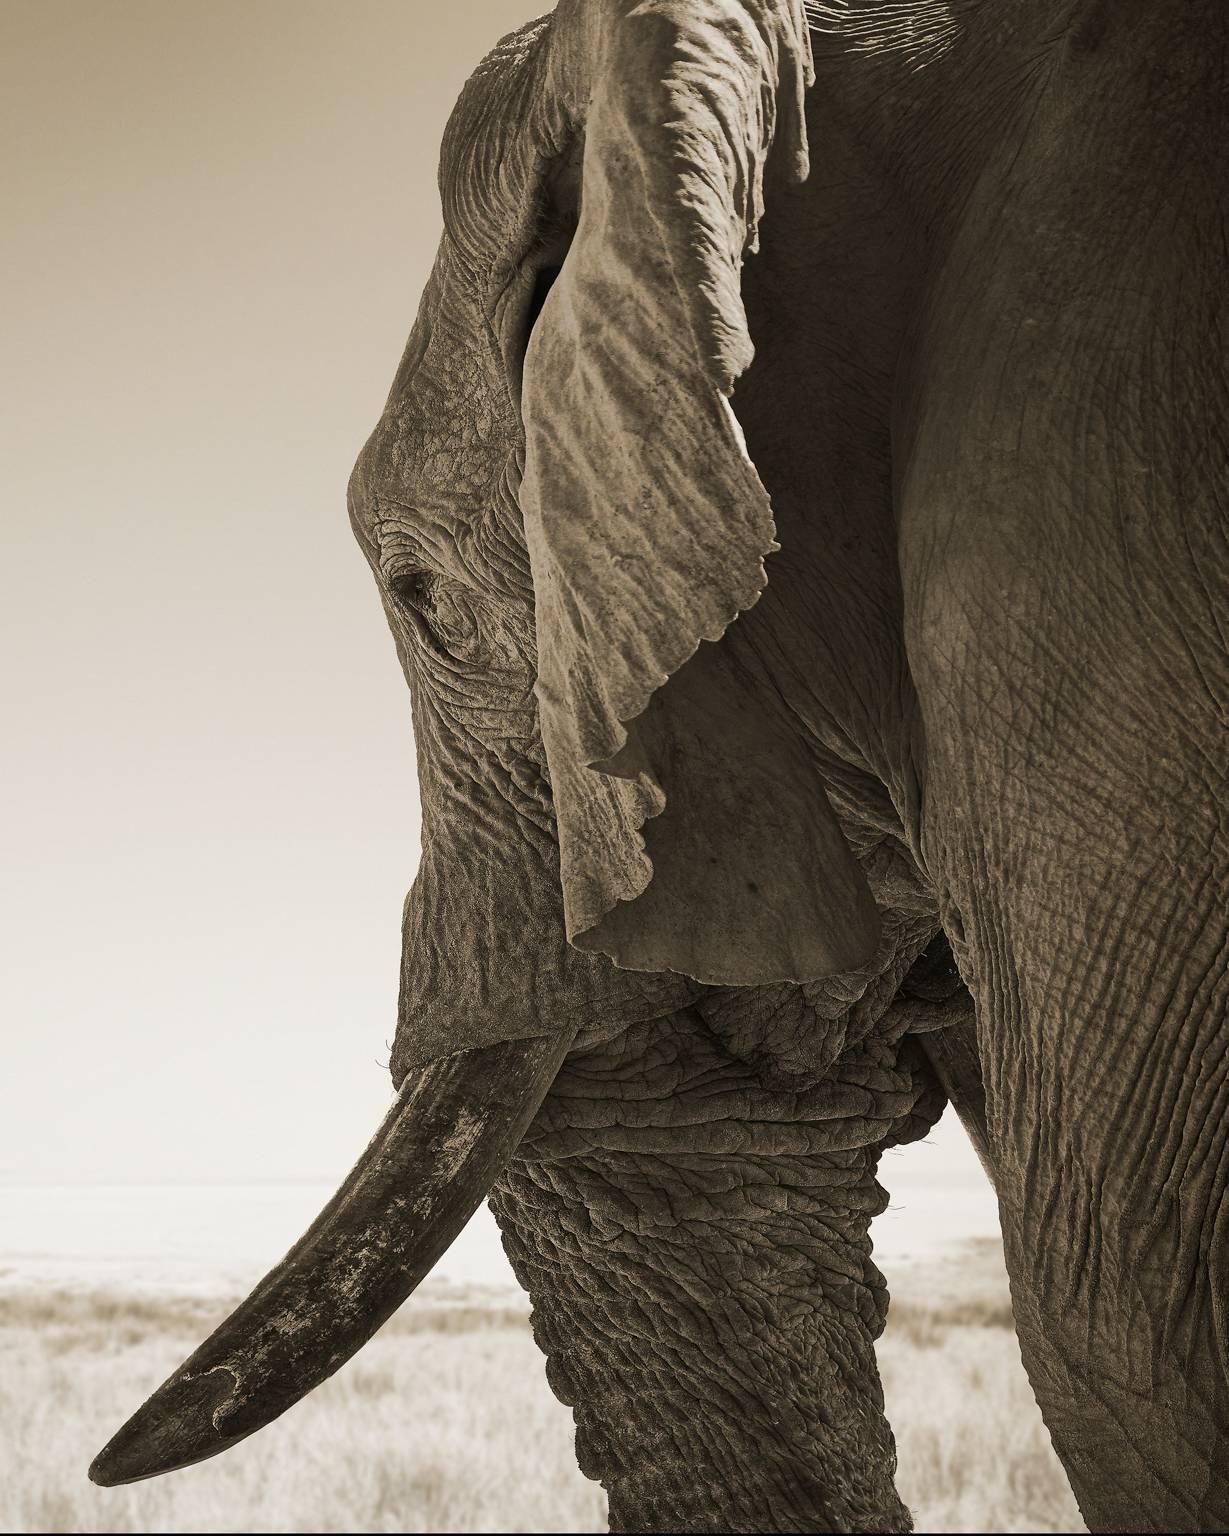 Chris Gordaneer Black and White Photograph - Elephant 02